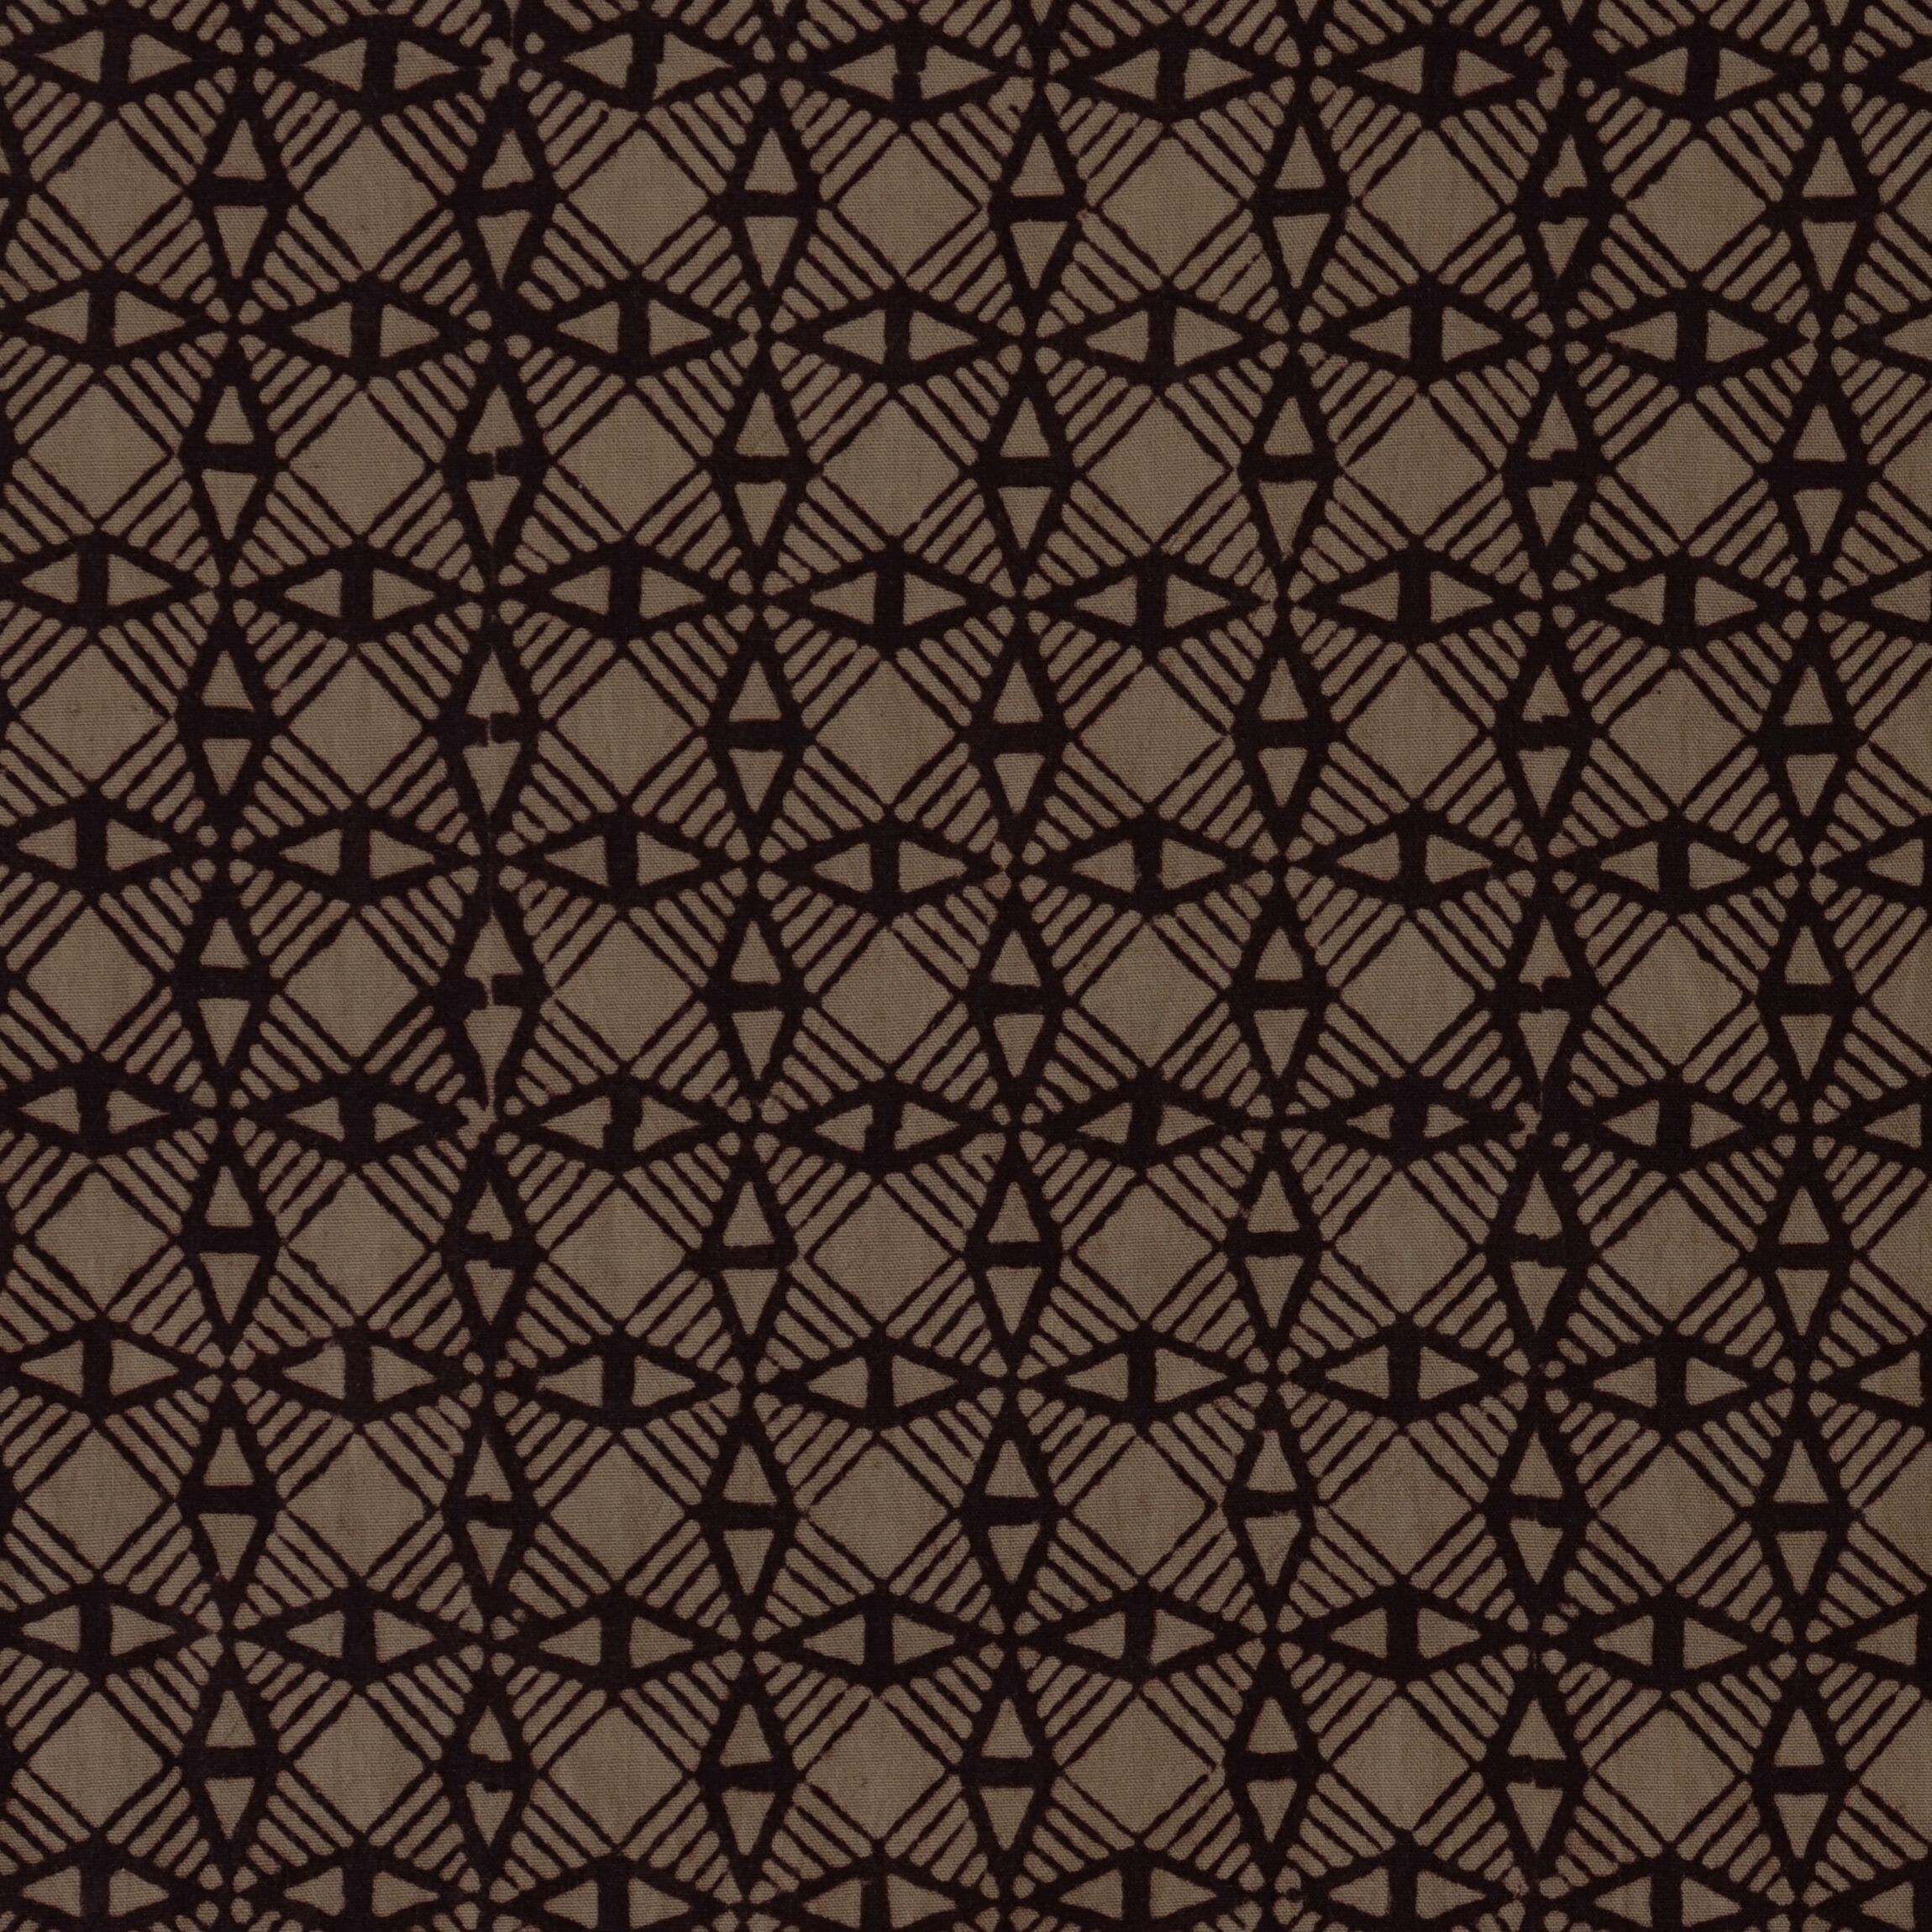 100% Block-Printed Cotton Fabric From India- Bagh - Iron Rust Black & Indigosol Khaki - Big Brother Print - Flat